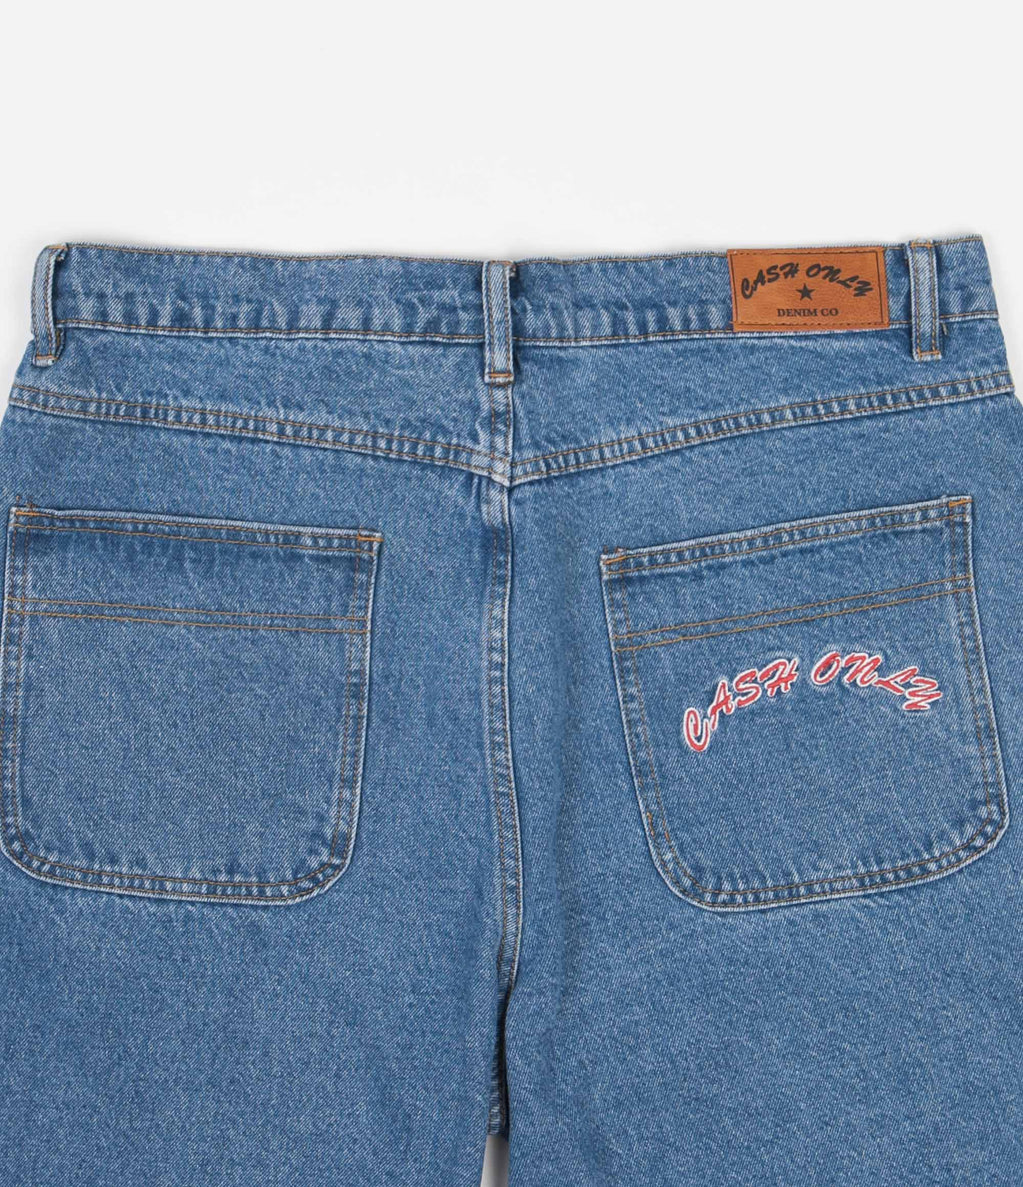 Cash Only Baggy Jean Shorts - Washed Indigo | Flatspot